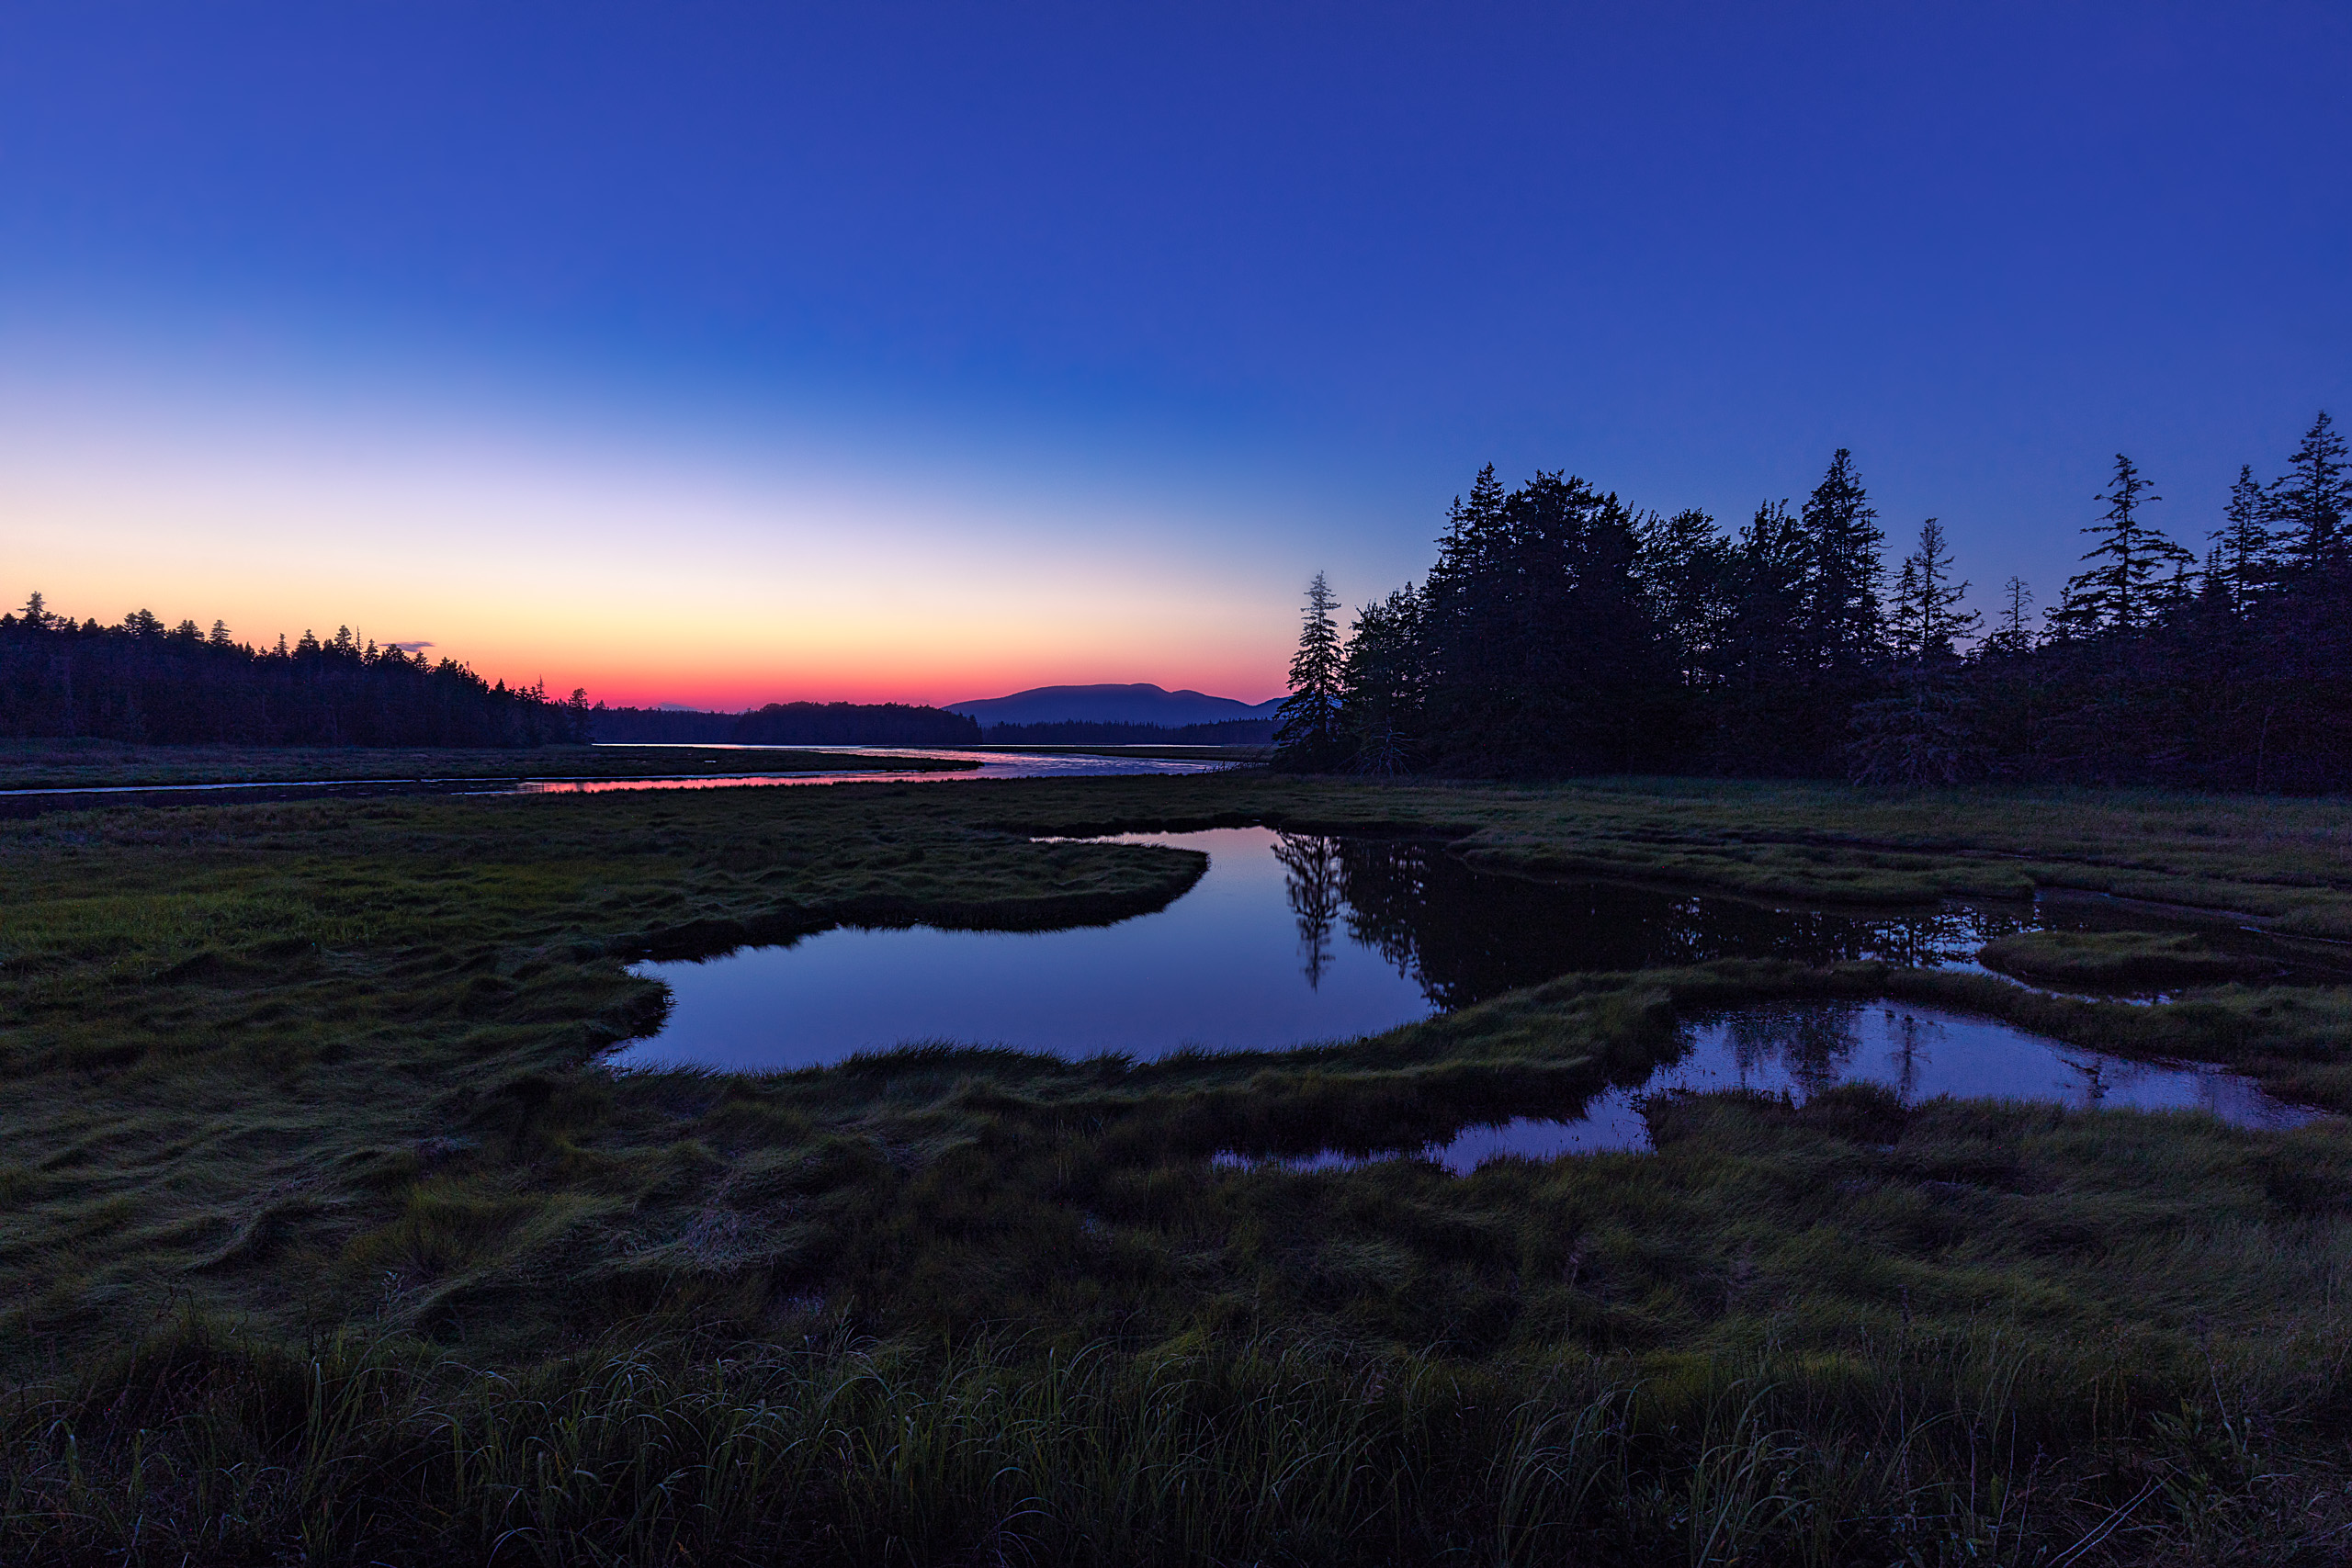 Southwest Harbor, Maine at blue hour